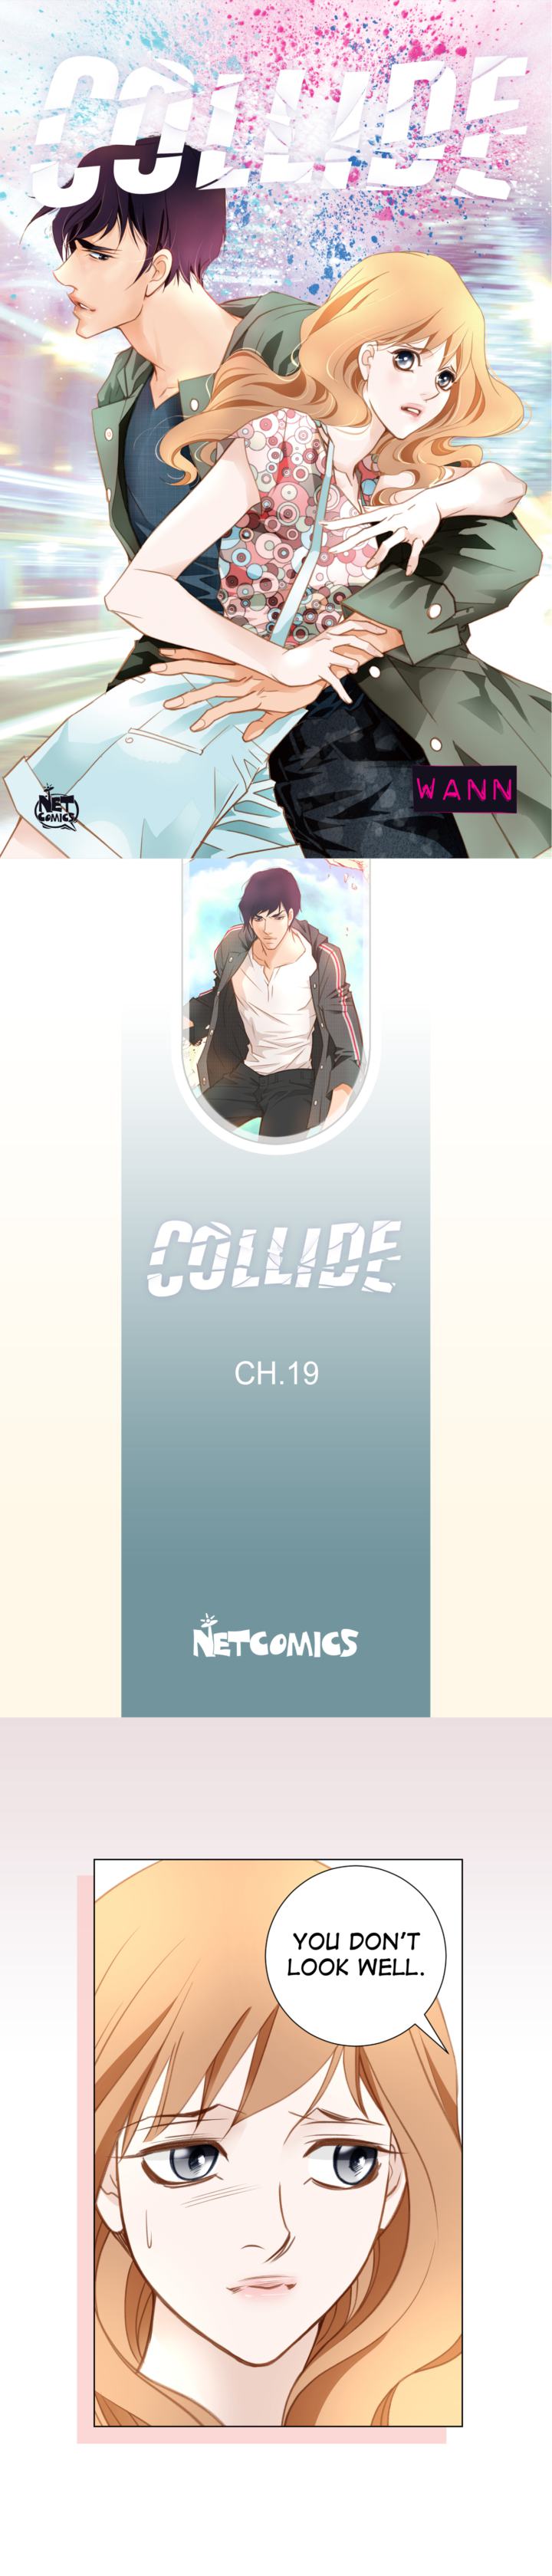 Collide Ch.19